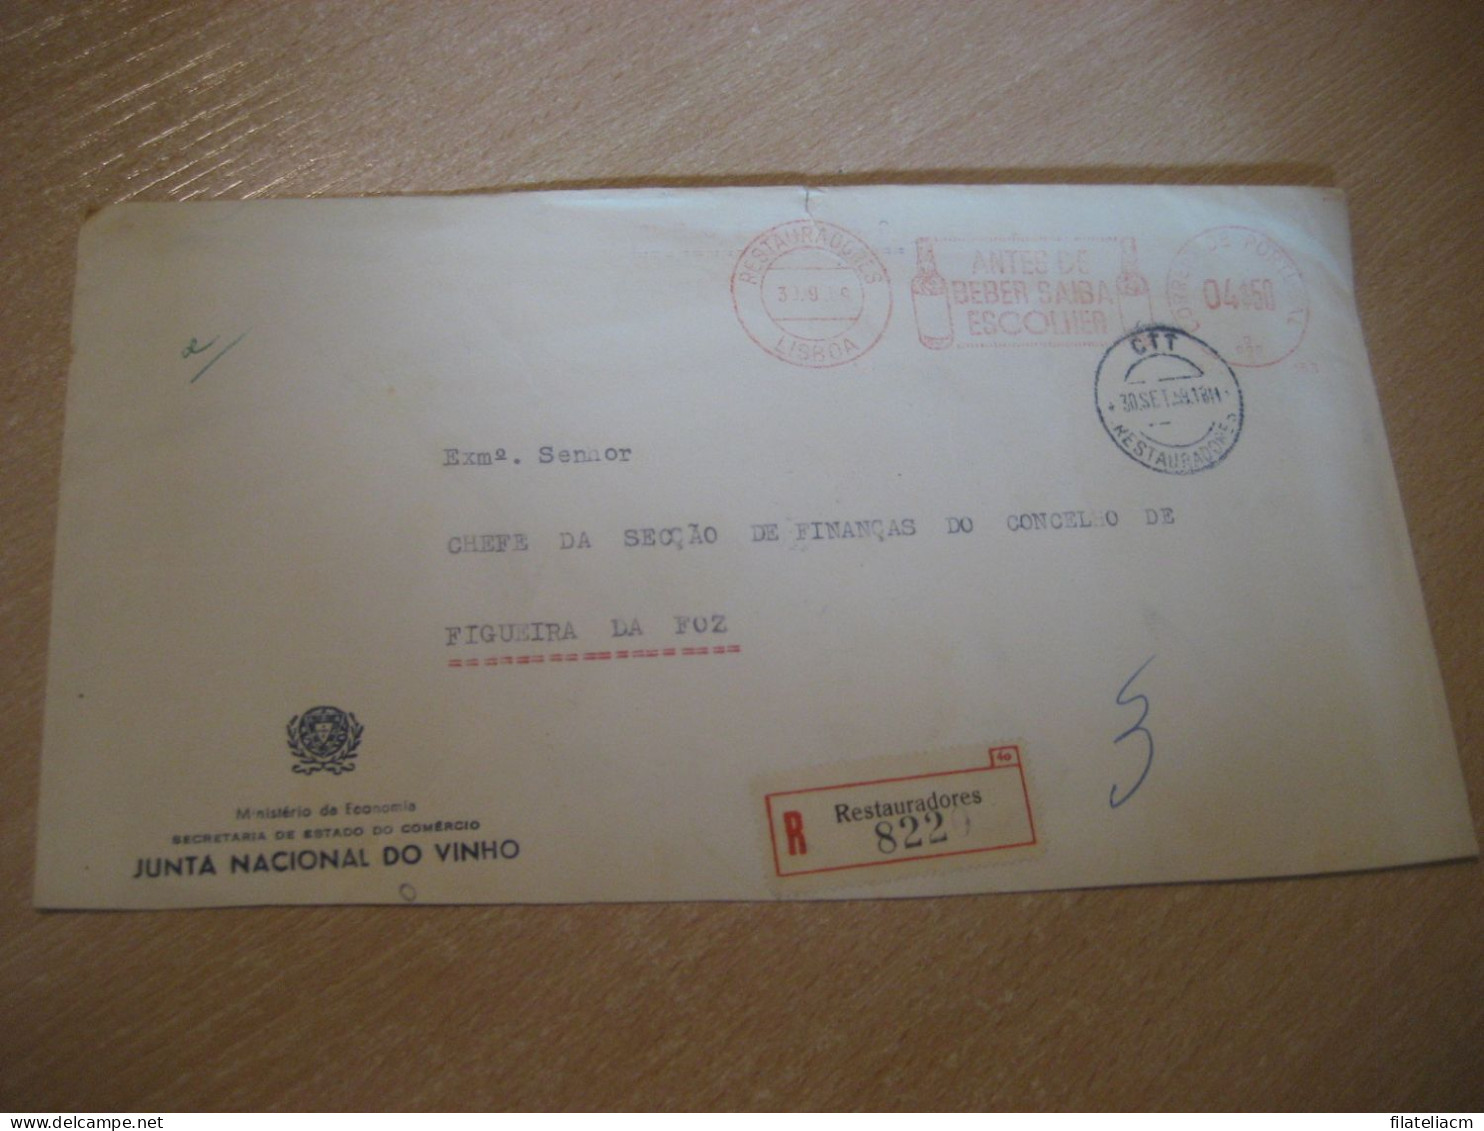 LISBOA 1959 To Figueira Da Foz Beber Junta Vinho Wine Enology Drink Registered Meter Mail Slight Faults Cover PORTUGAL - Cartas & Documentos